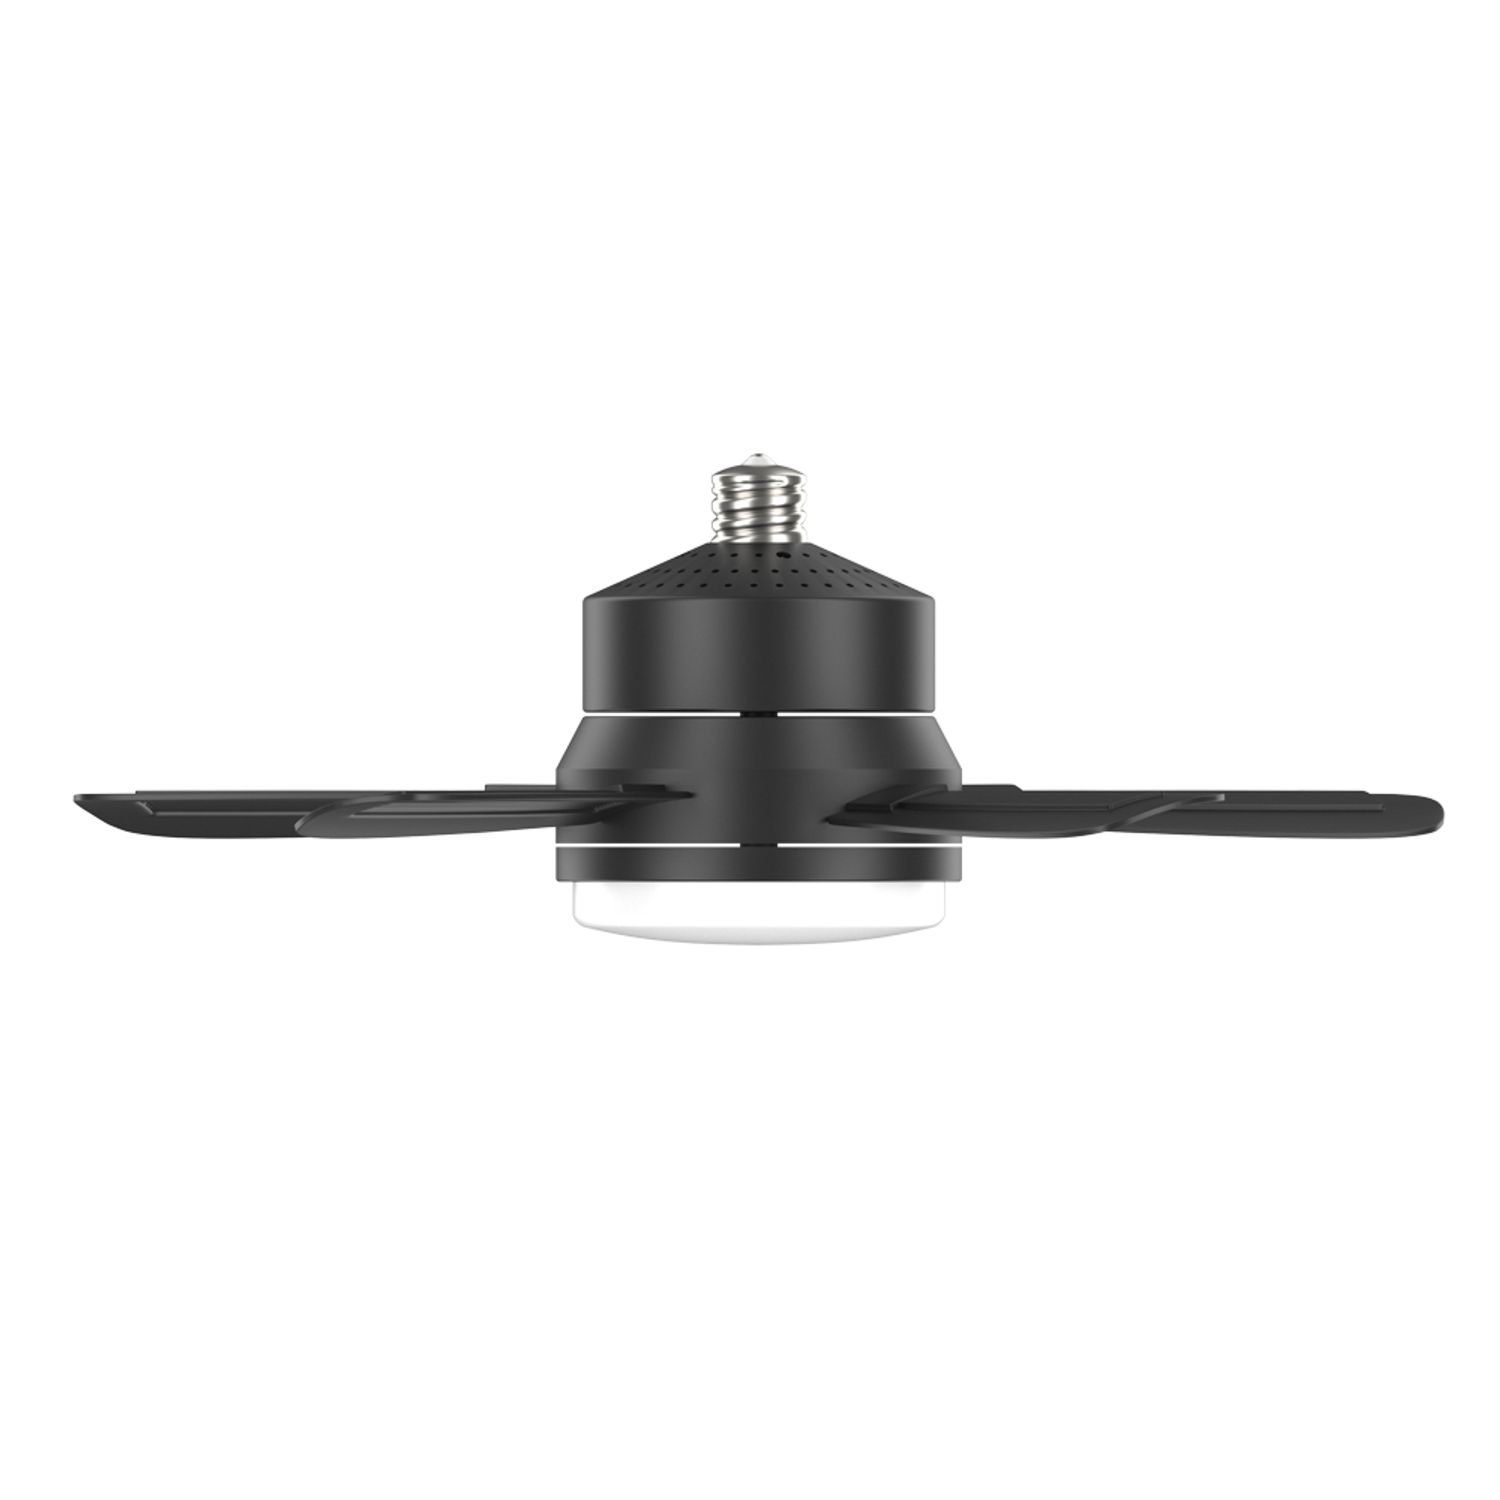 KBS 16 inch black Socket Ceiling Fan with Dimmable Light side view